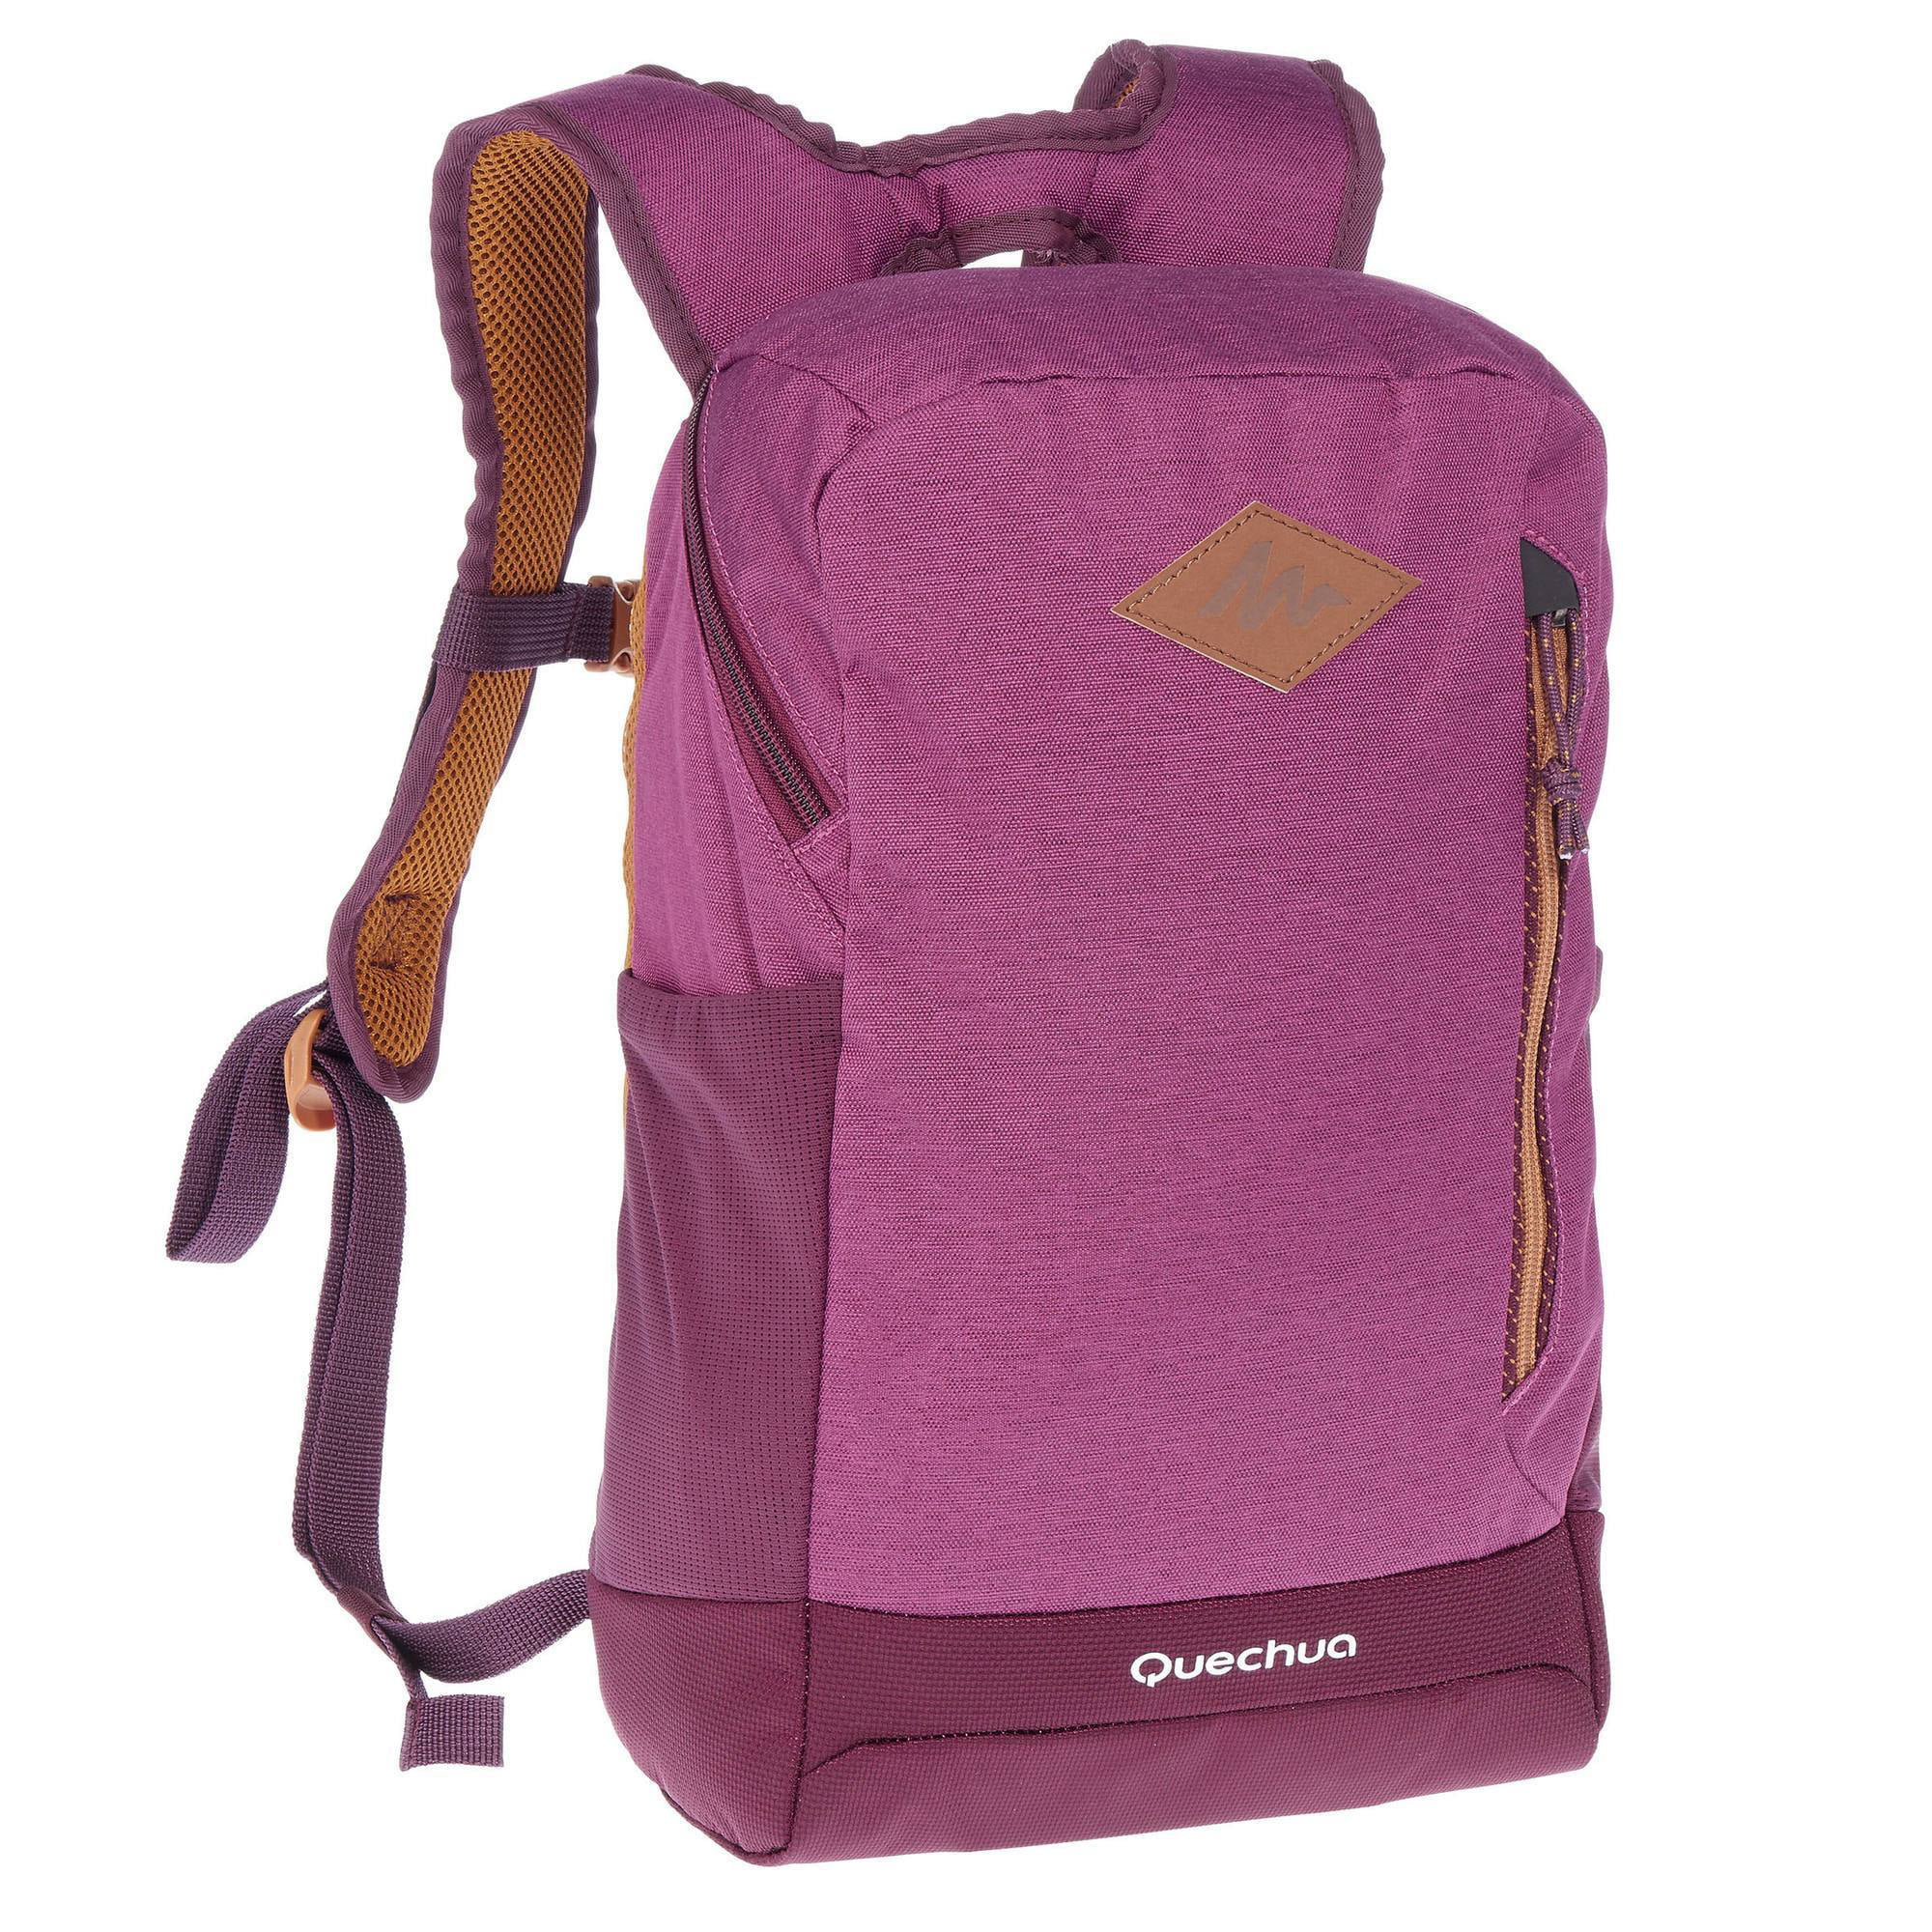 quechua brand backpack